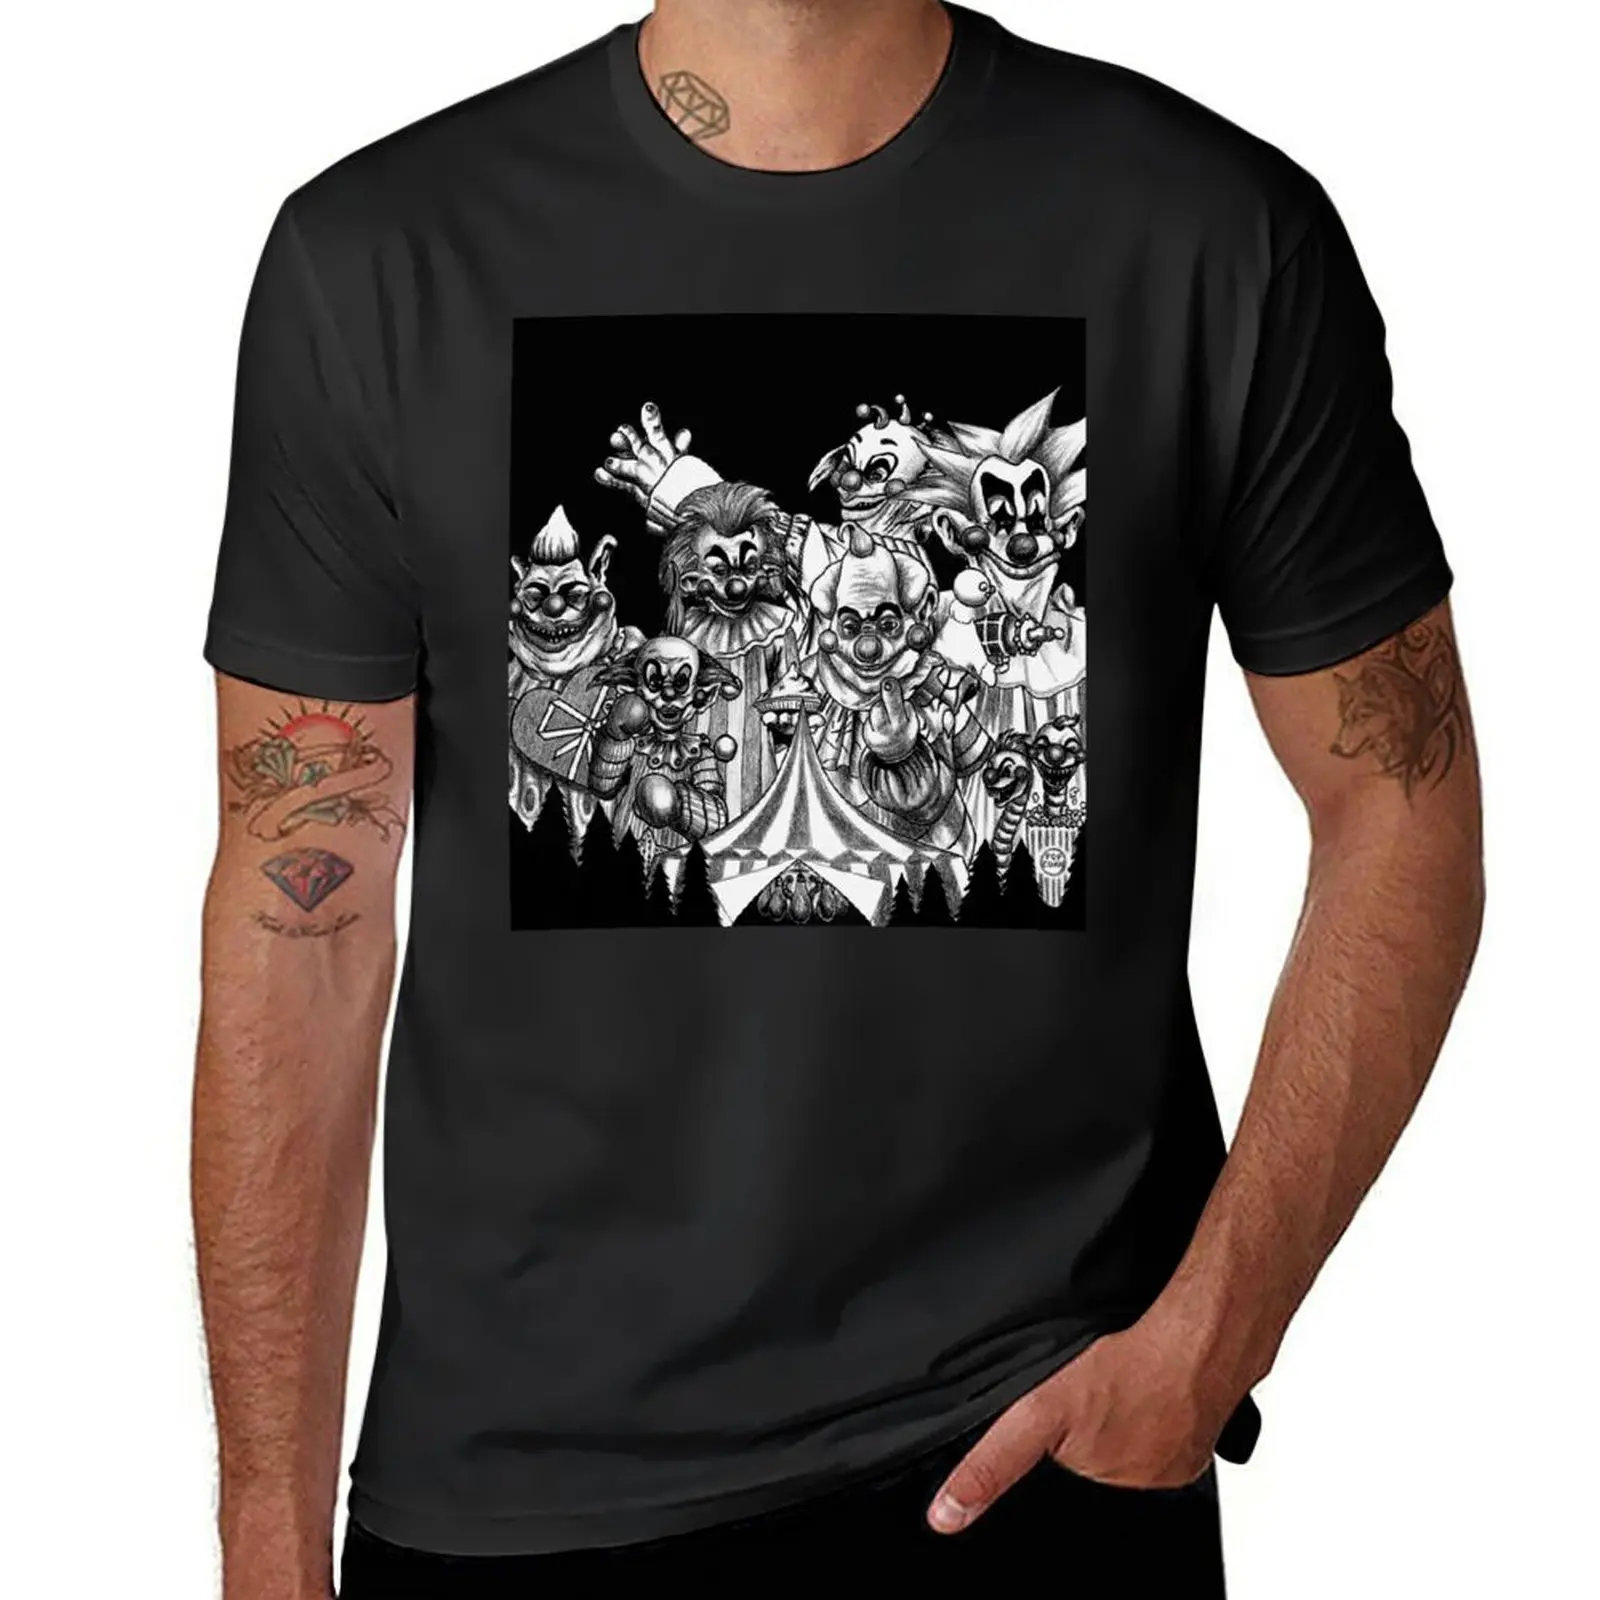 Новая футболка Killer Klowns From Outer Space, футболка на заказ, топы больших размеров, белые футболки для мальчиков, мужская футболка